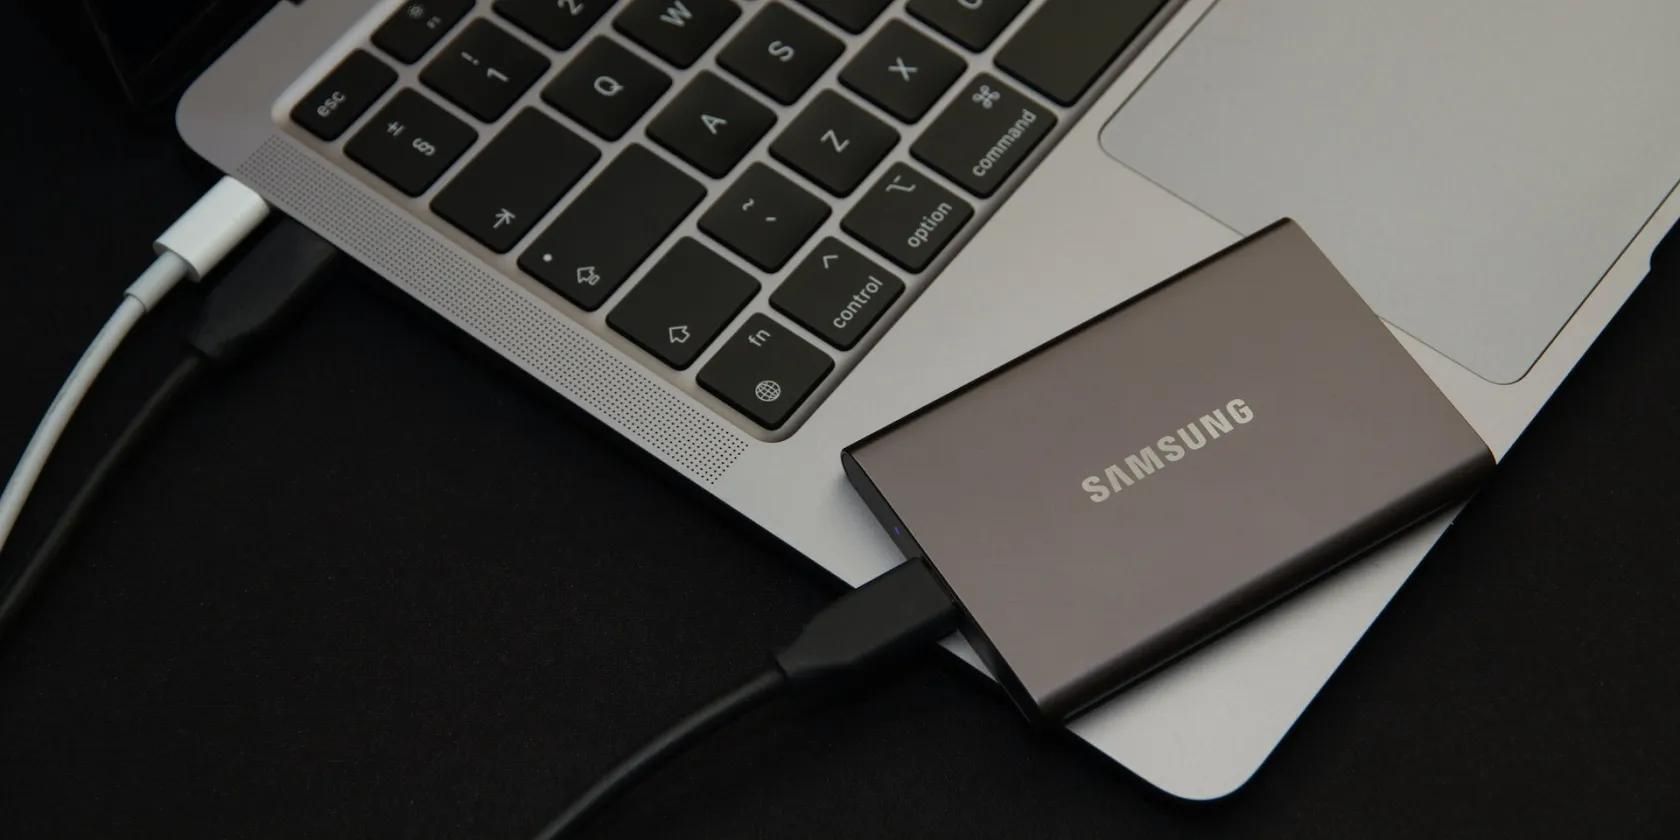 Samsung SSD drive plugged into a Mac laptop